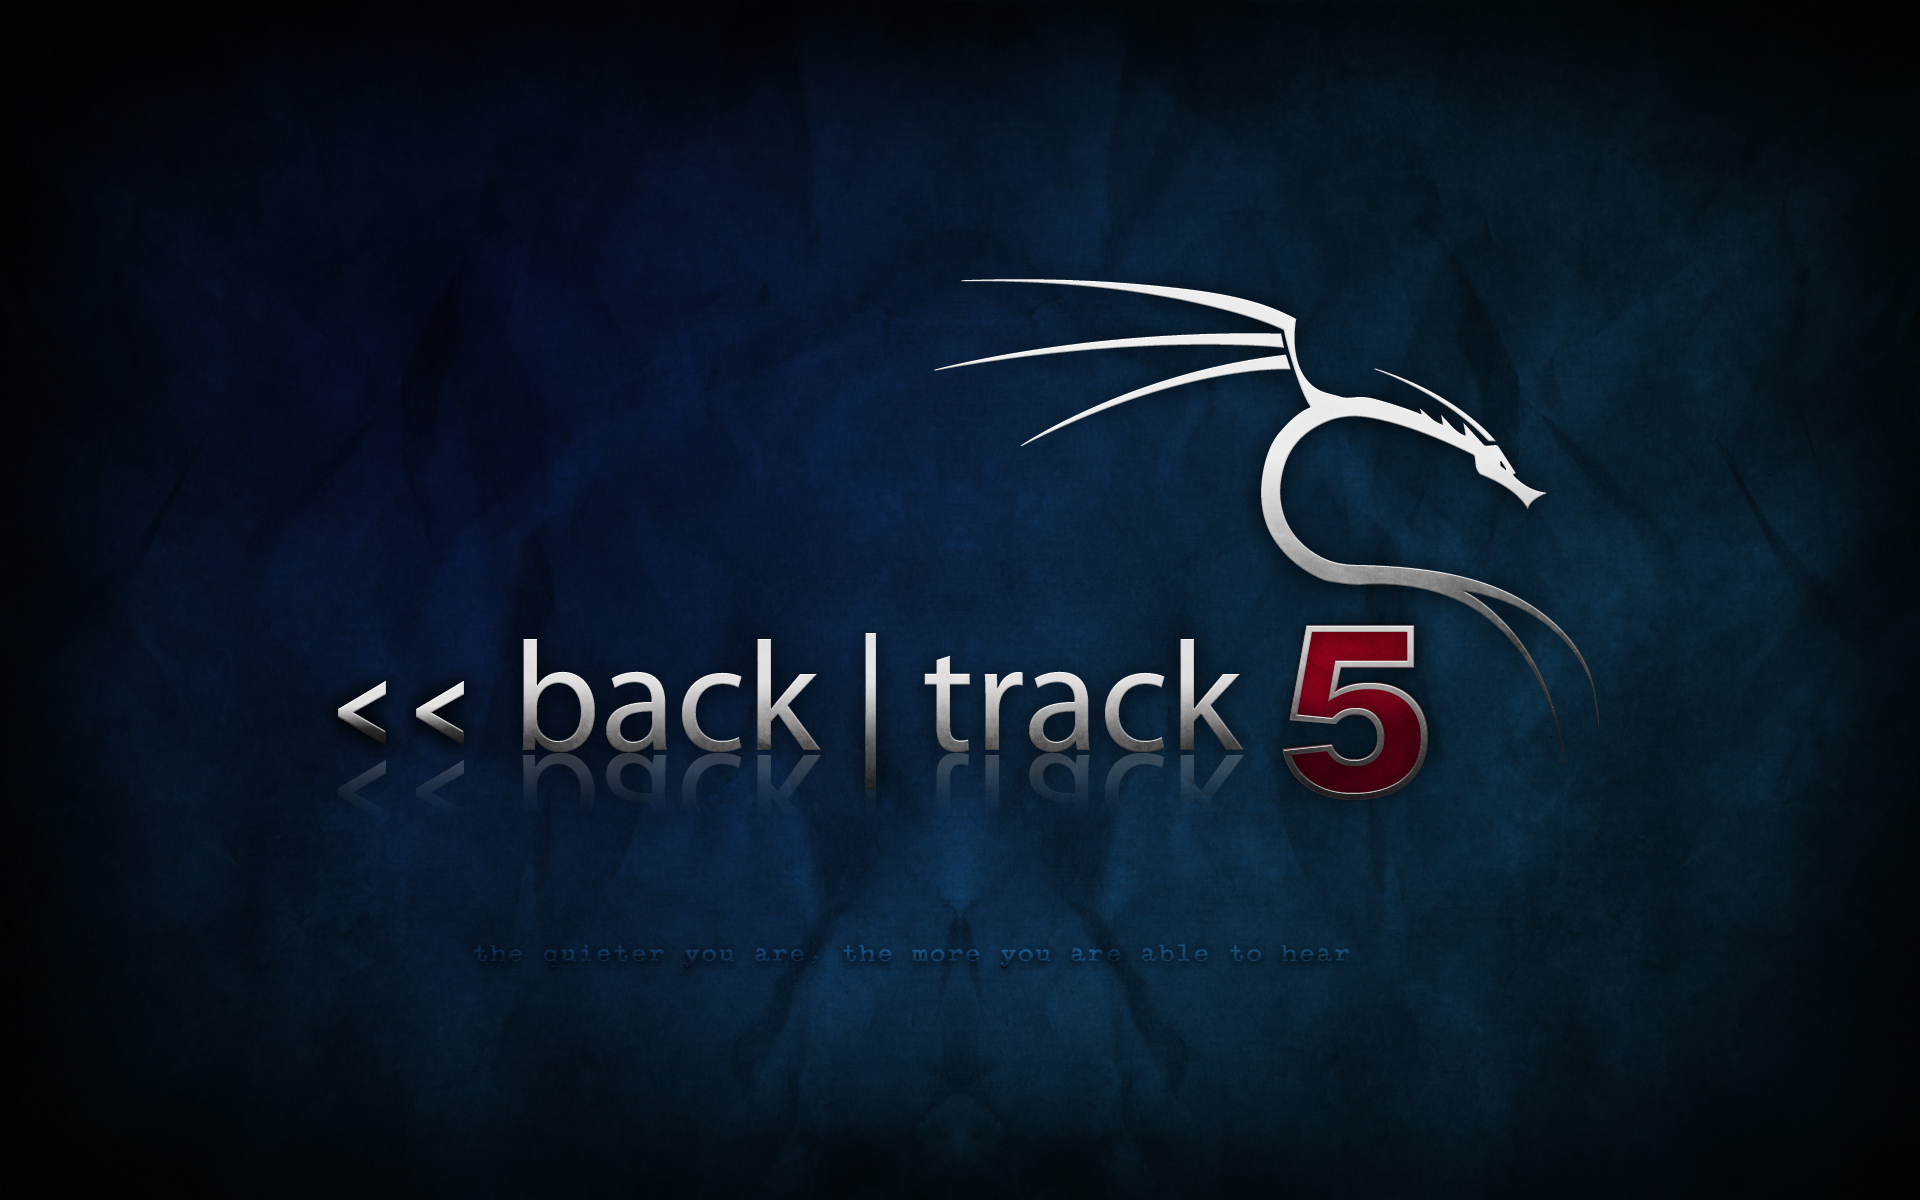 backtrack-5-blue2-2.png